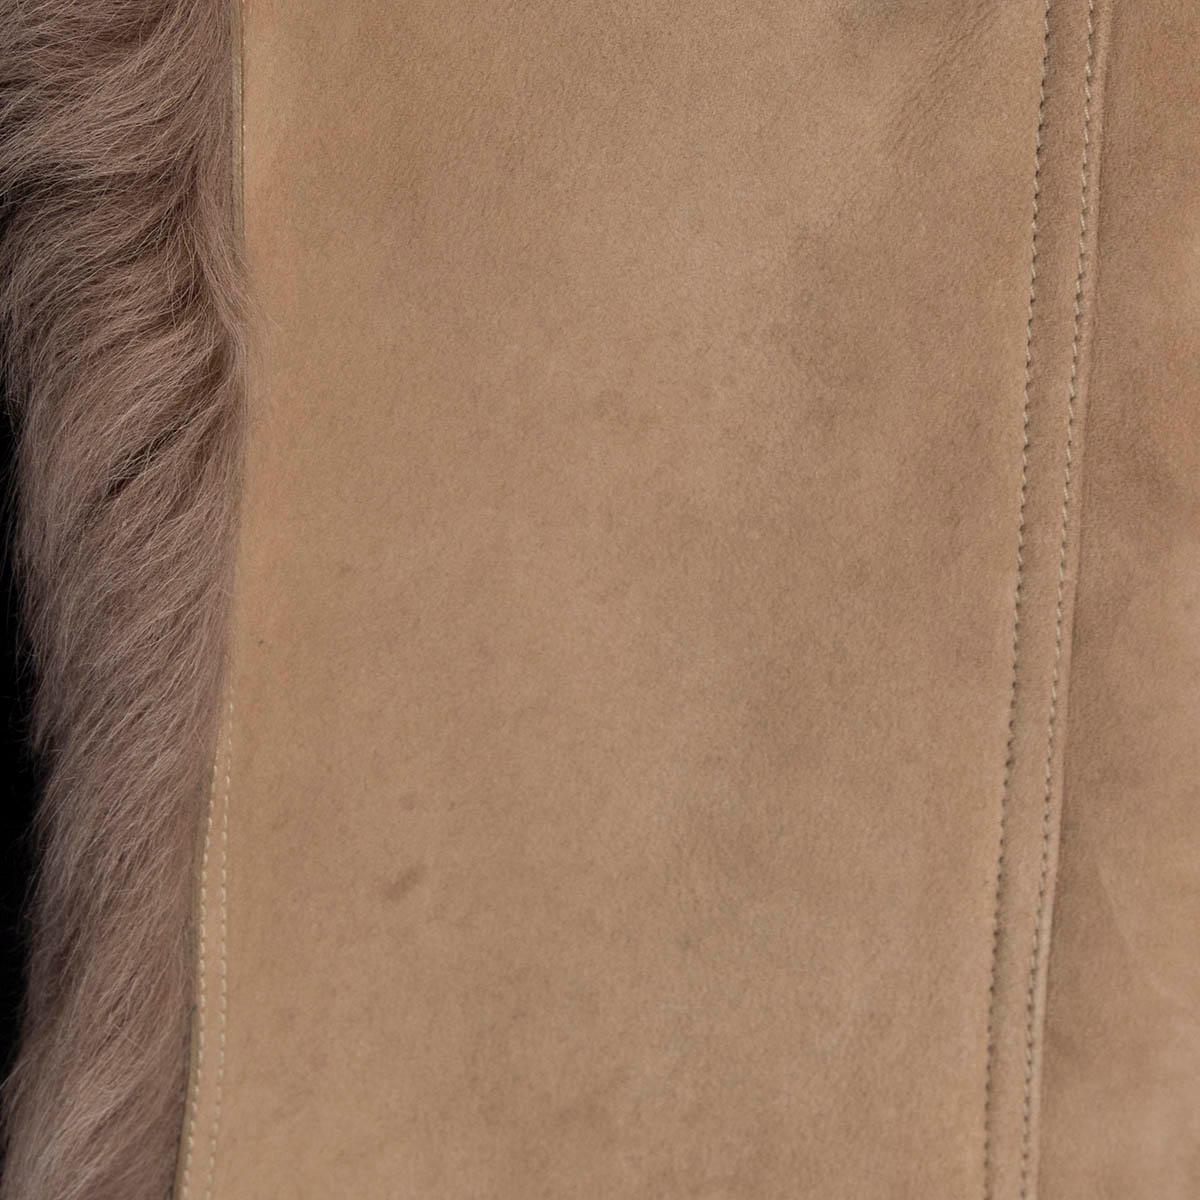 Women's BURBERRY beige suede SHEARLING TRENCH Coat Jacket 8 S